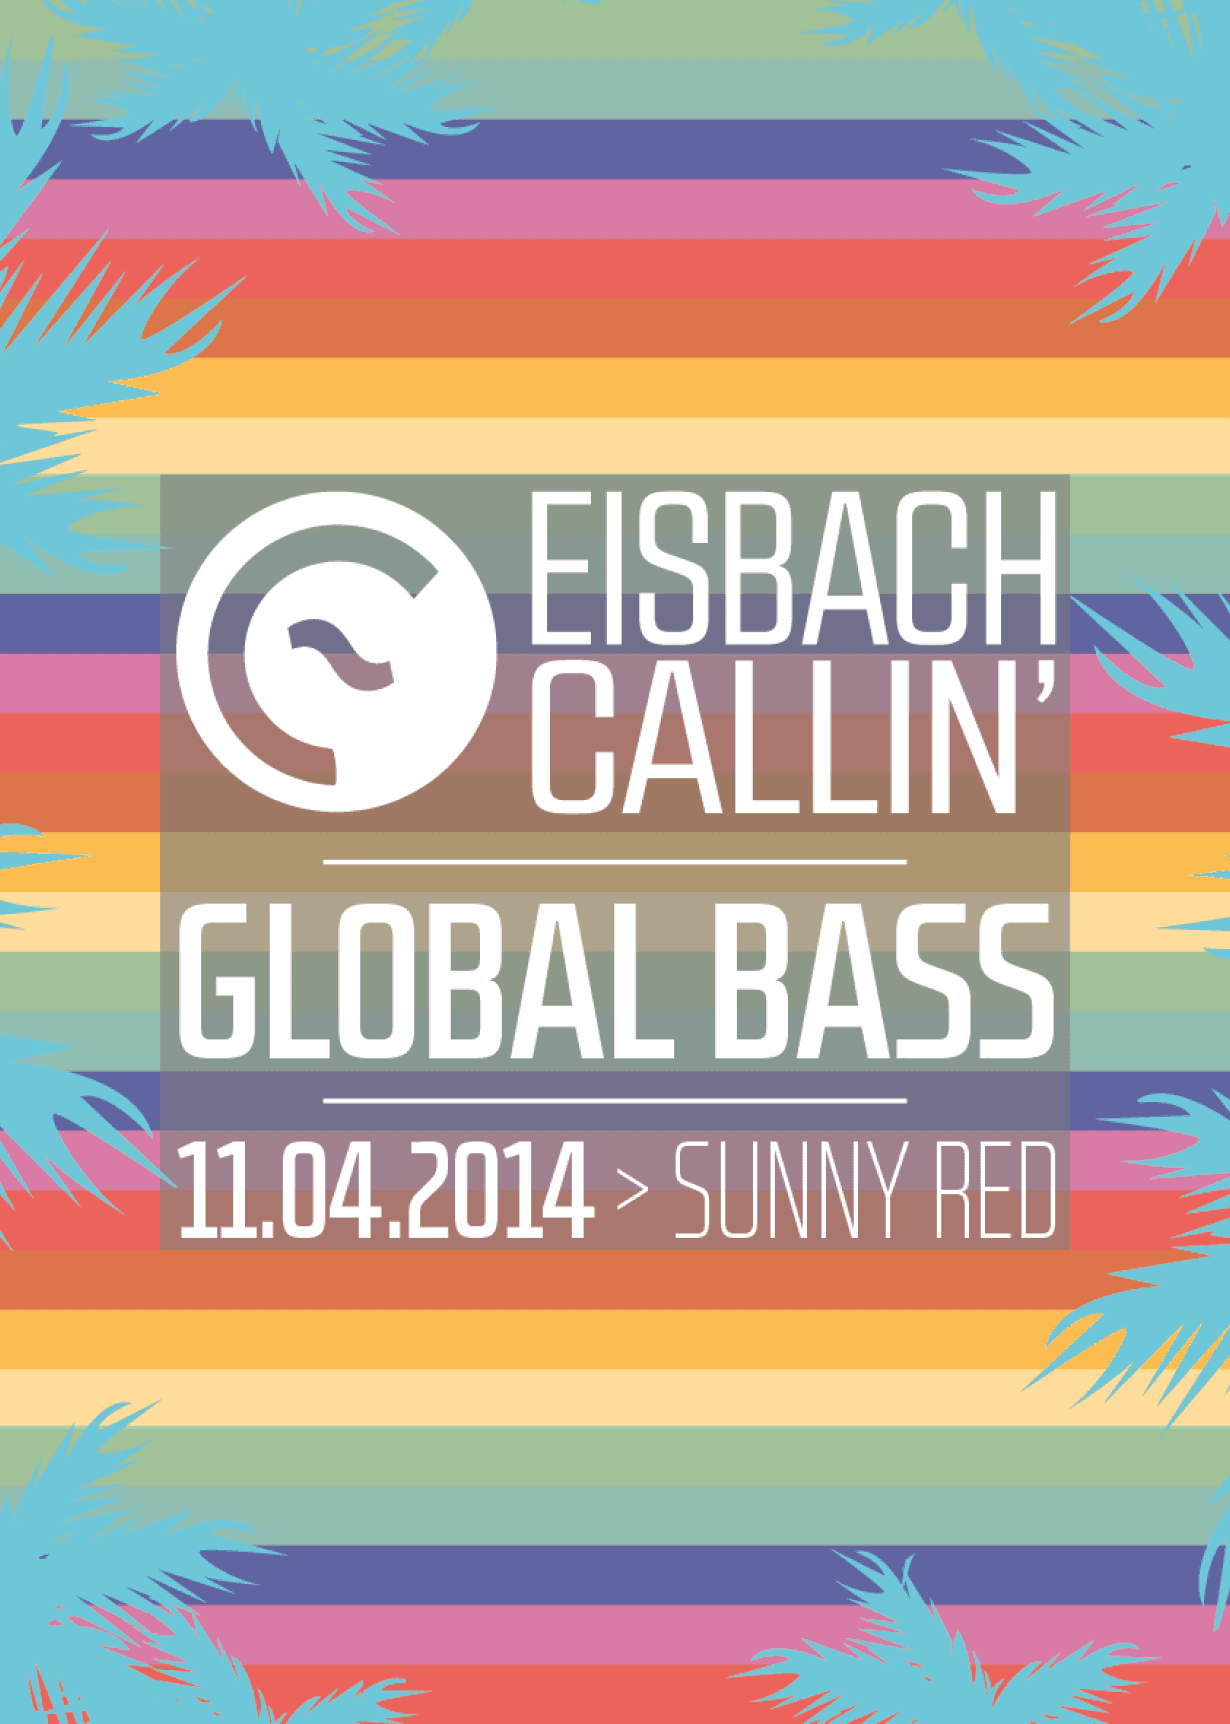 Global Bass